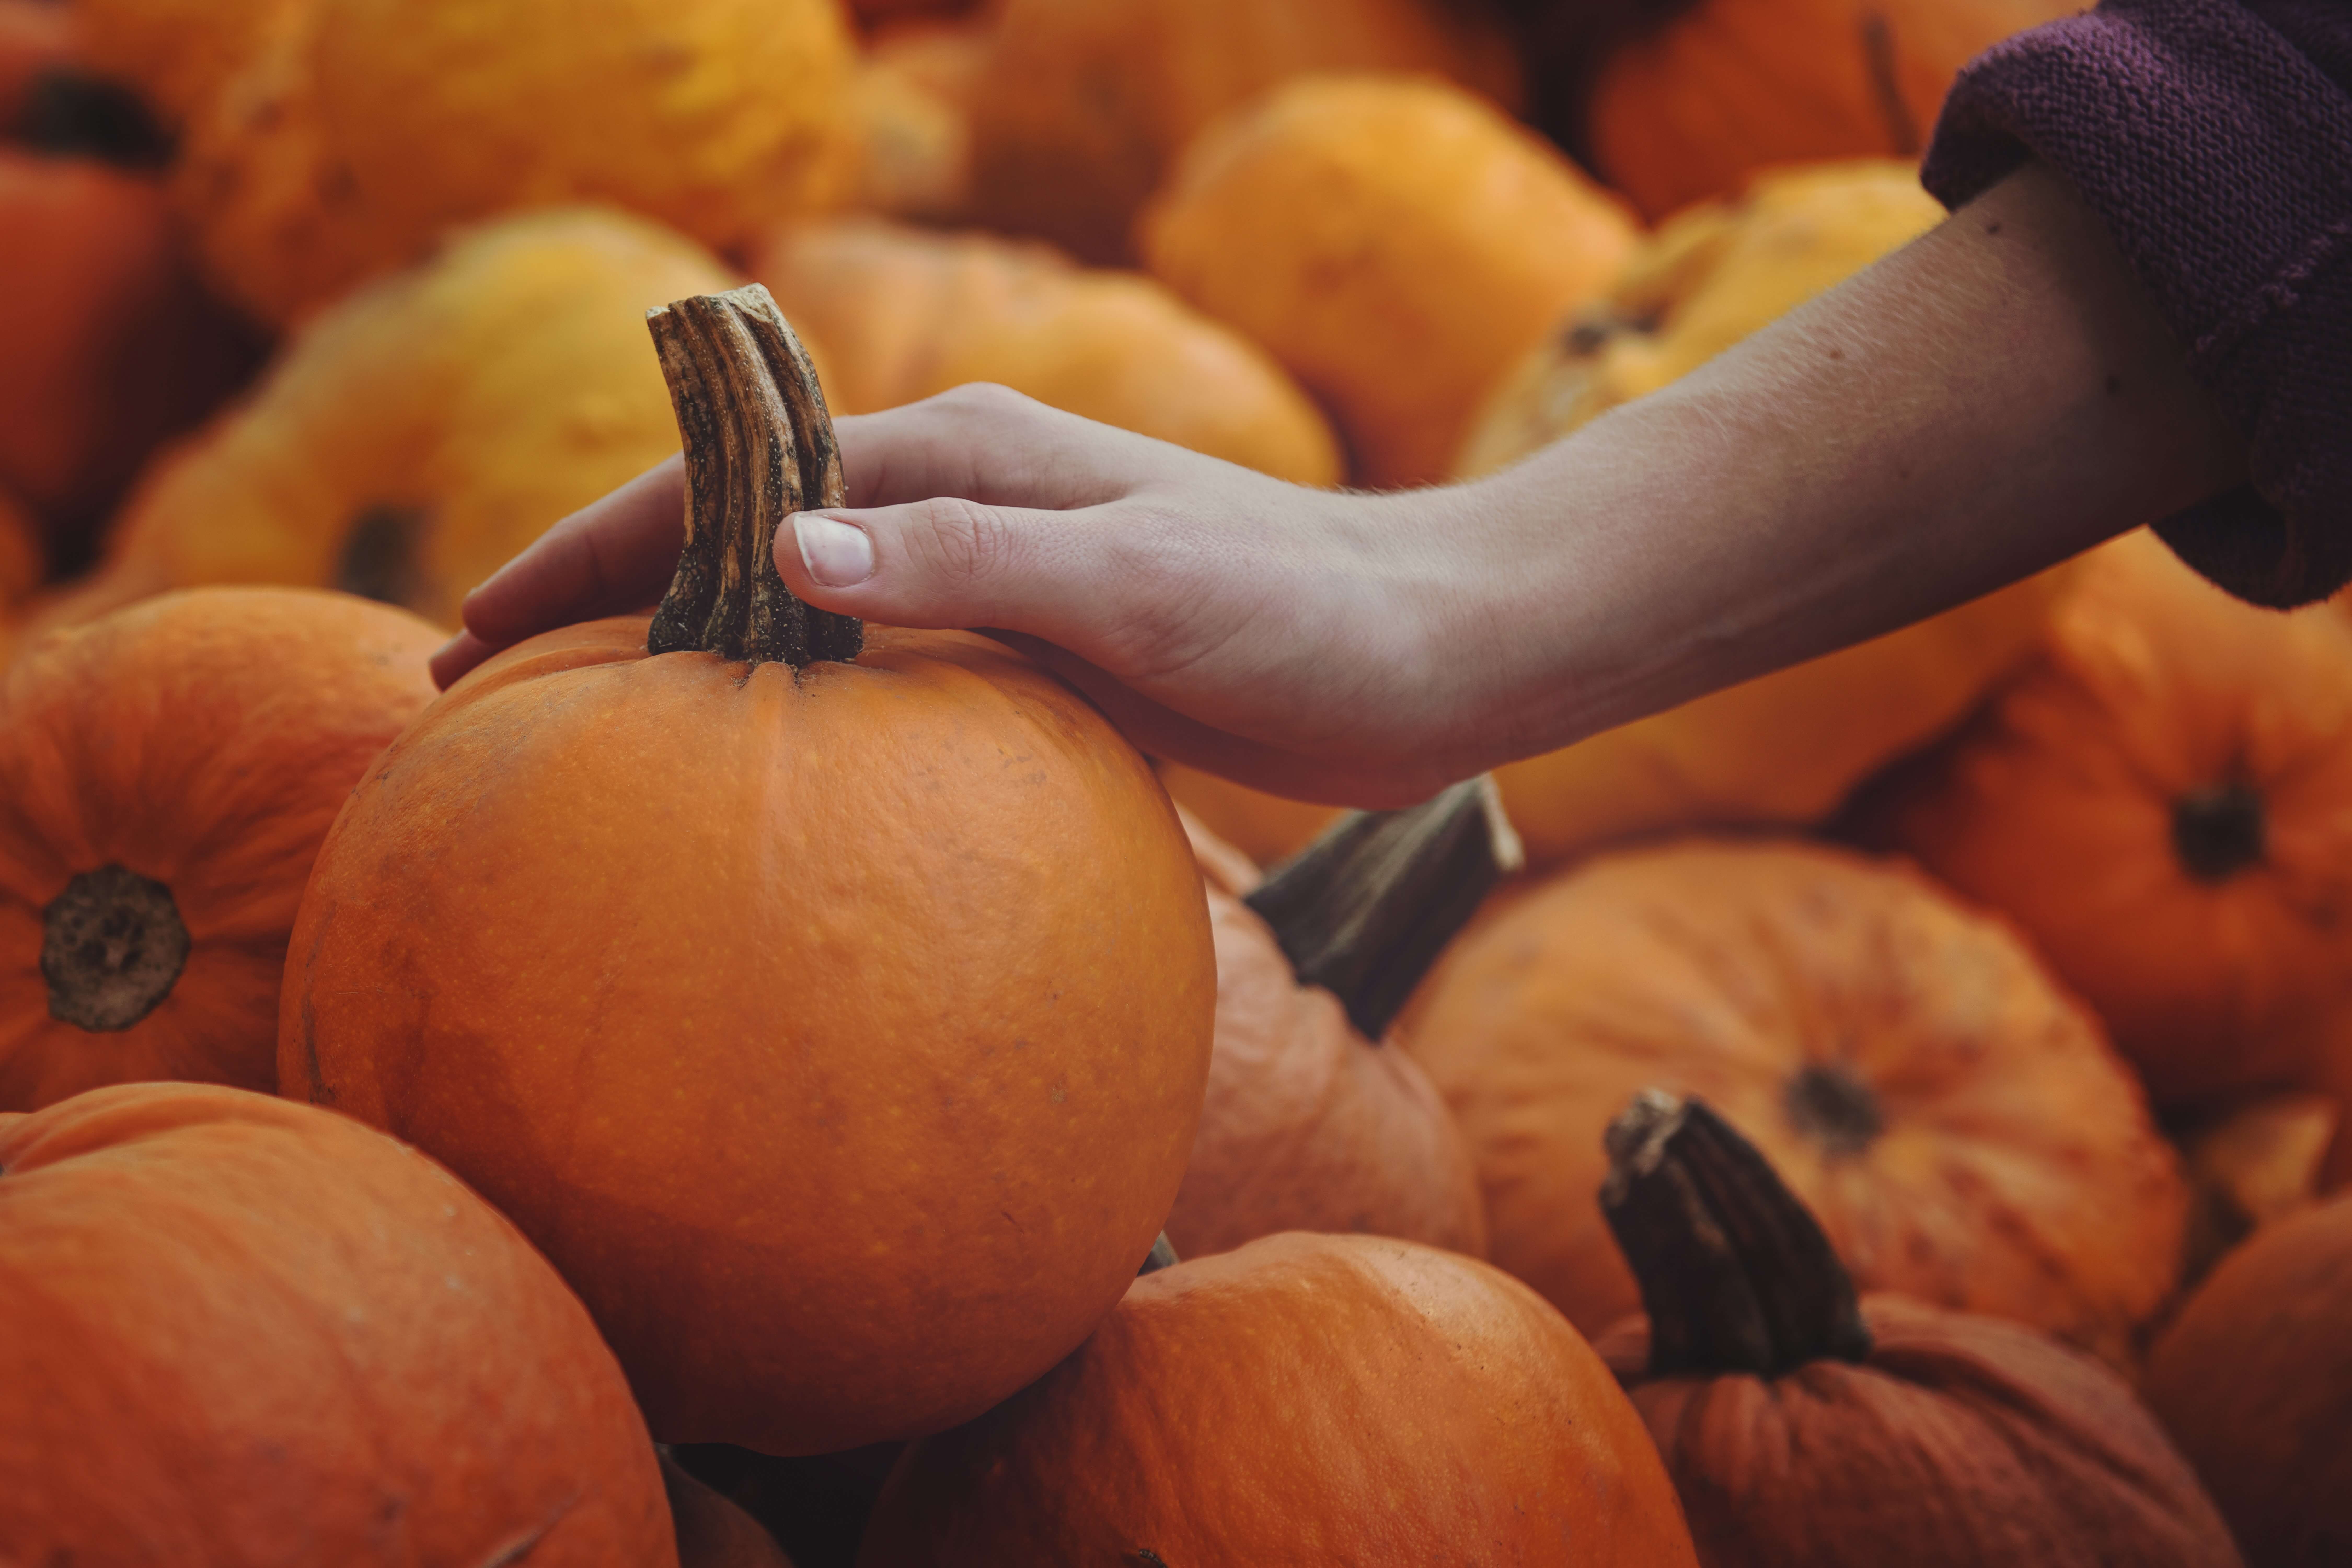 Pumpkin picking is a fun way to burn calories this fall